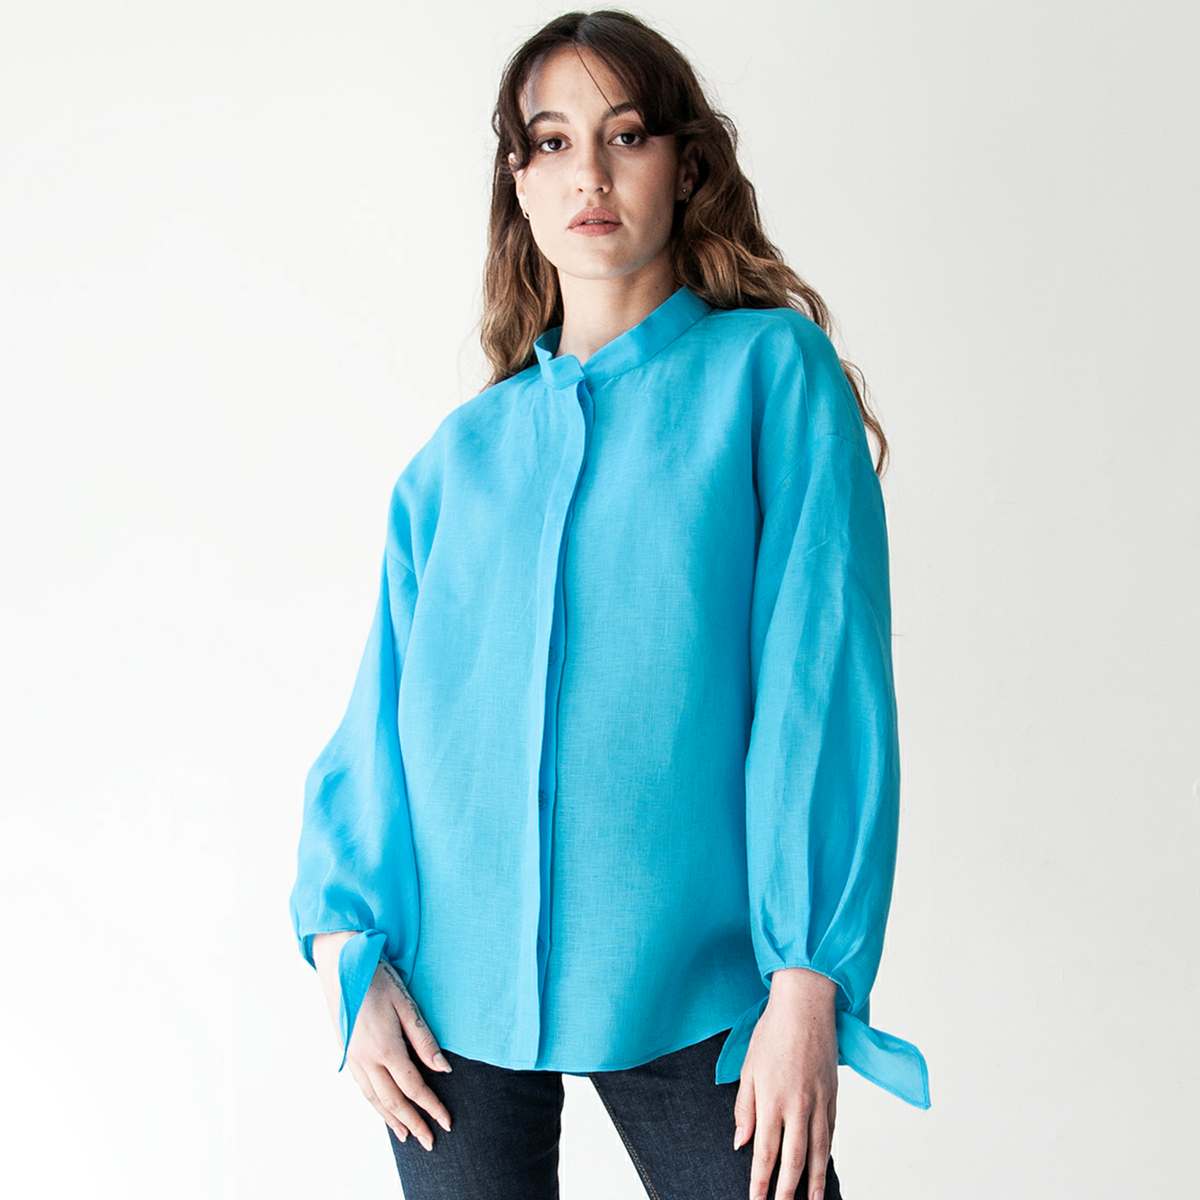 Women's 100% Linen Shirt - MAEVE - Turquoise - Made in Ireland